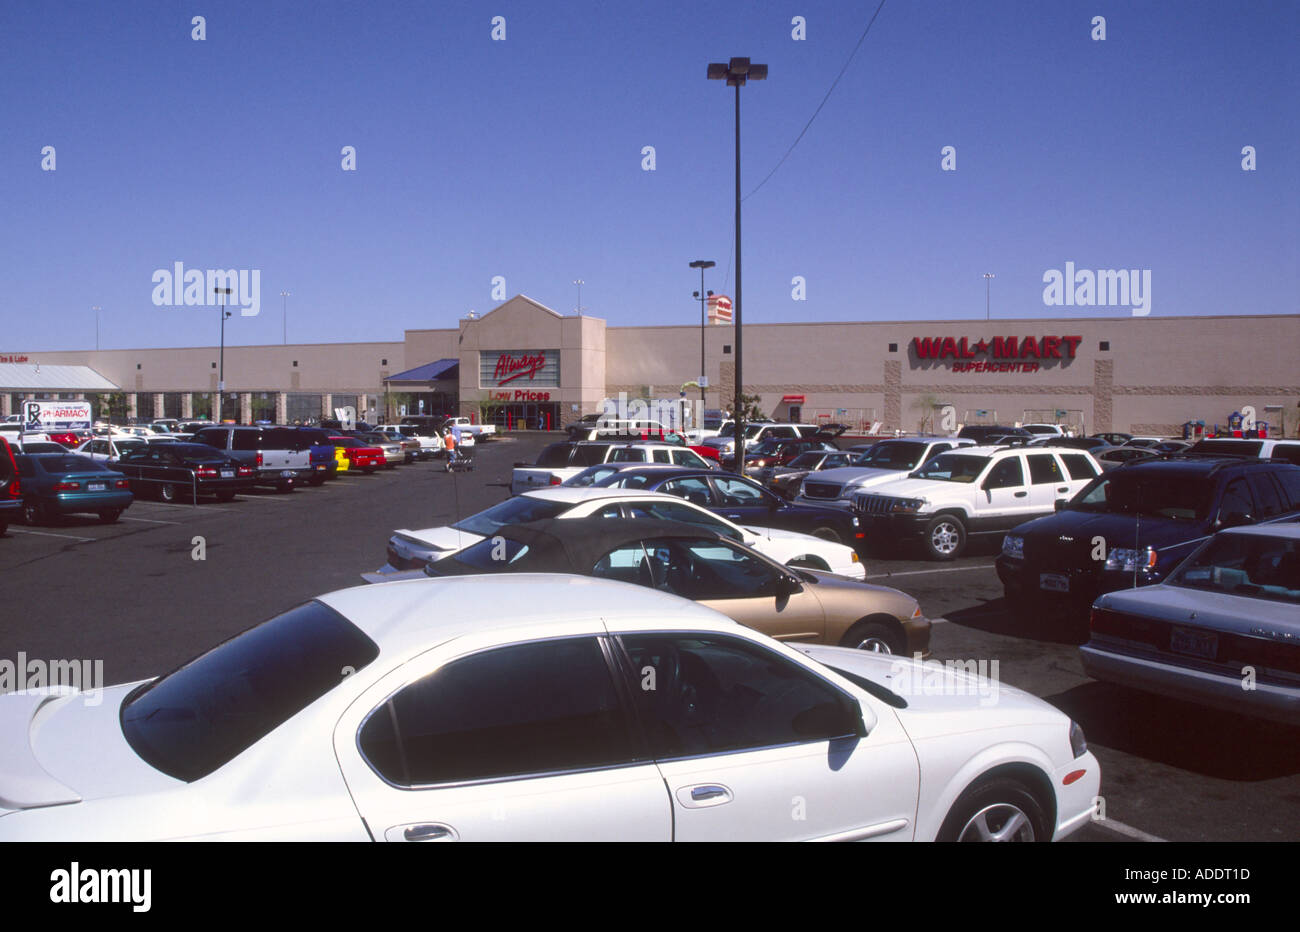 Cars in Walmart car park Las Vegas Nevada USA Stock Photo - Alamy